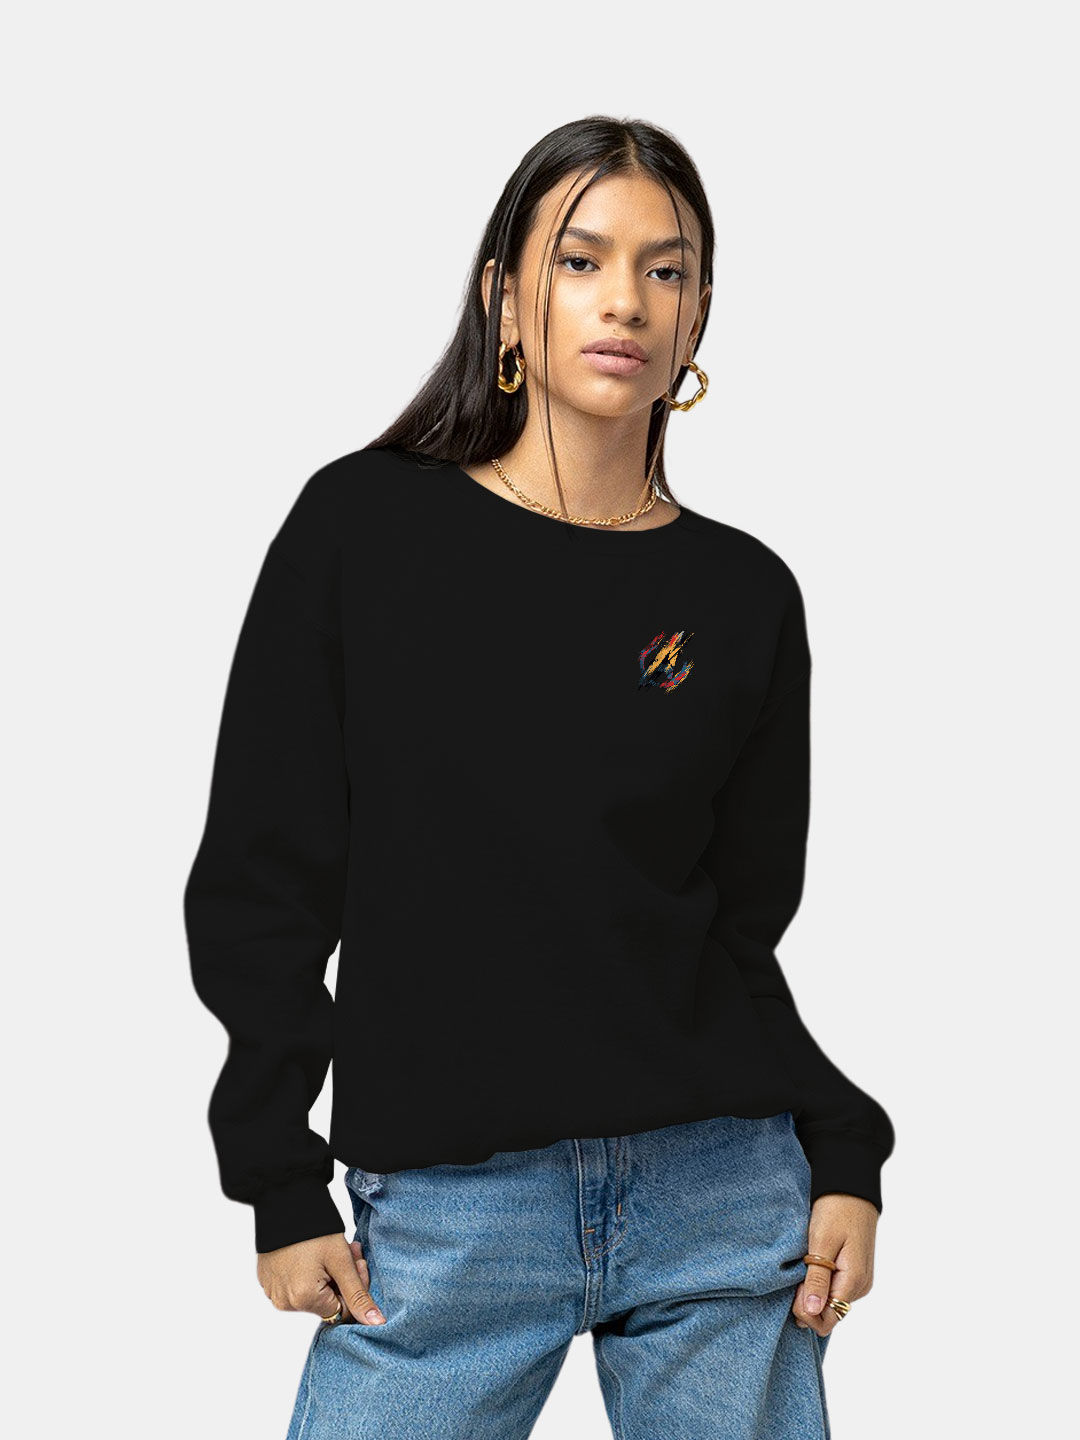 Buy Avenger Badge - Female Designer Sweatshirt Sweatshirts Online